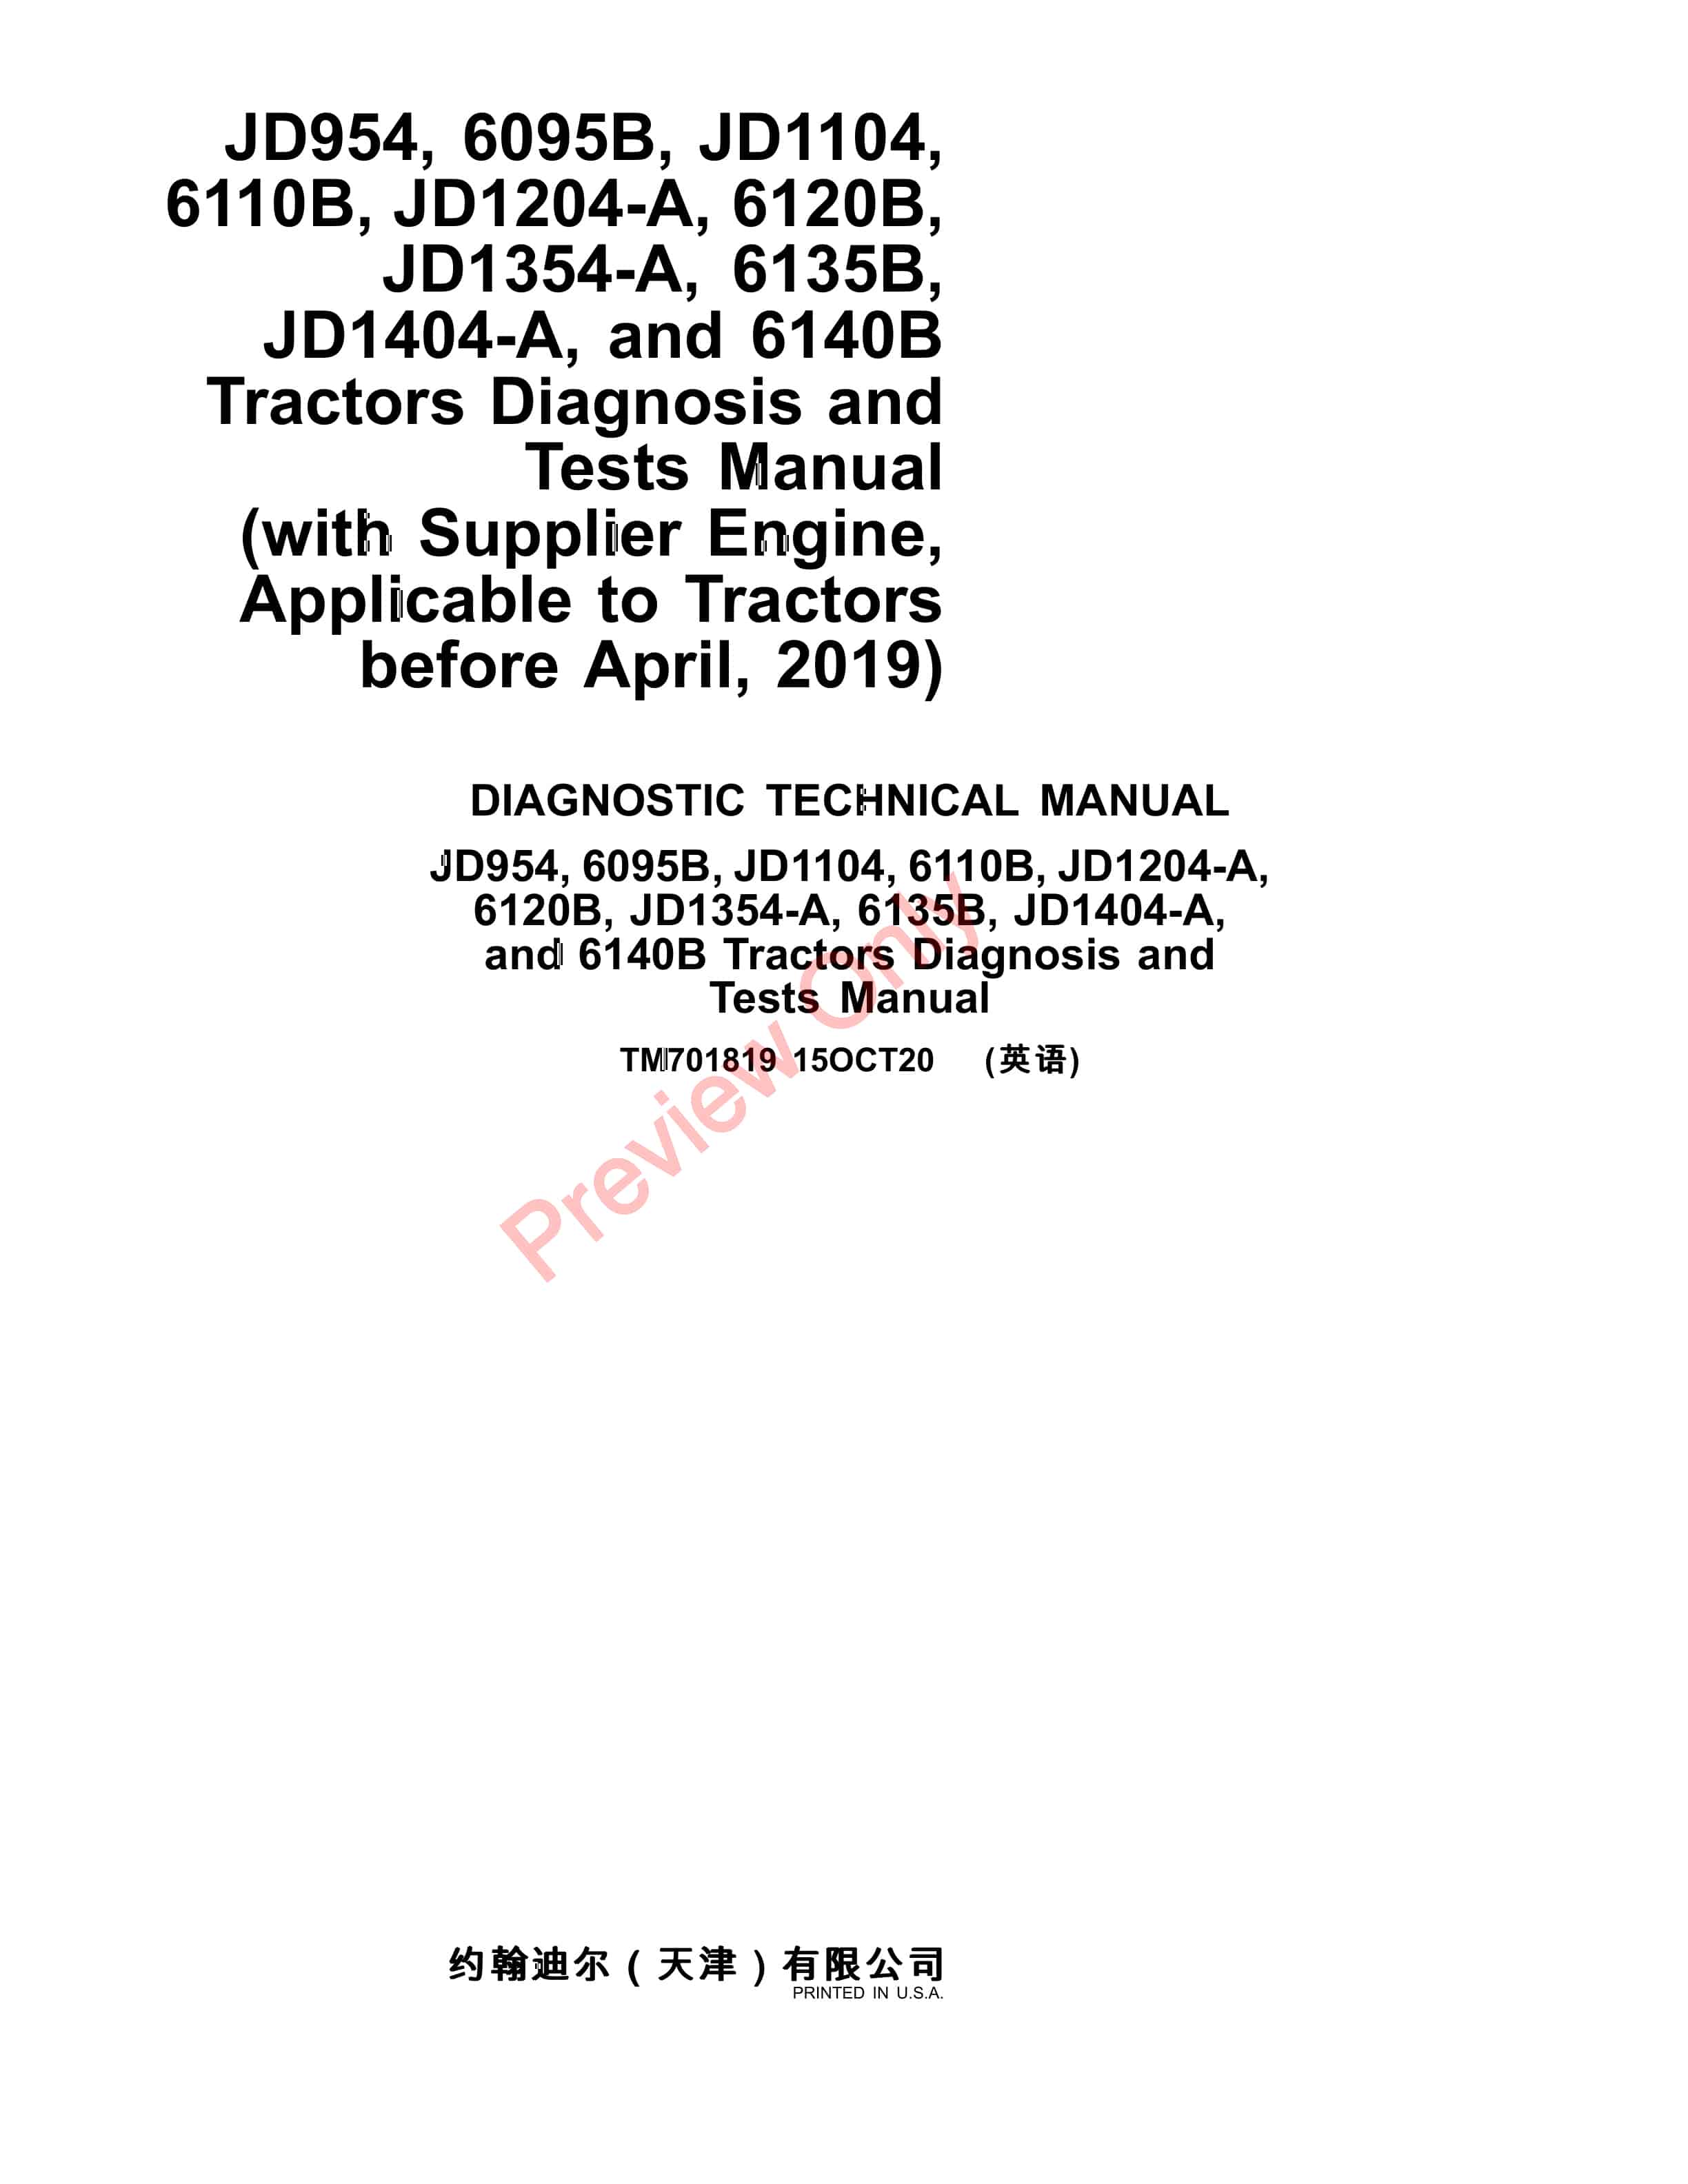 John Deere JD954 6095B JD1104 6110B JD1204 Diagnostic Technical Manual TM701819 15OCT20 1